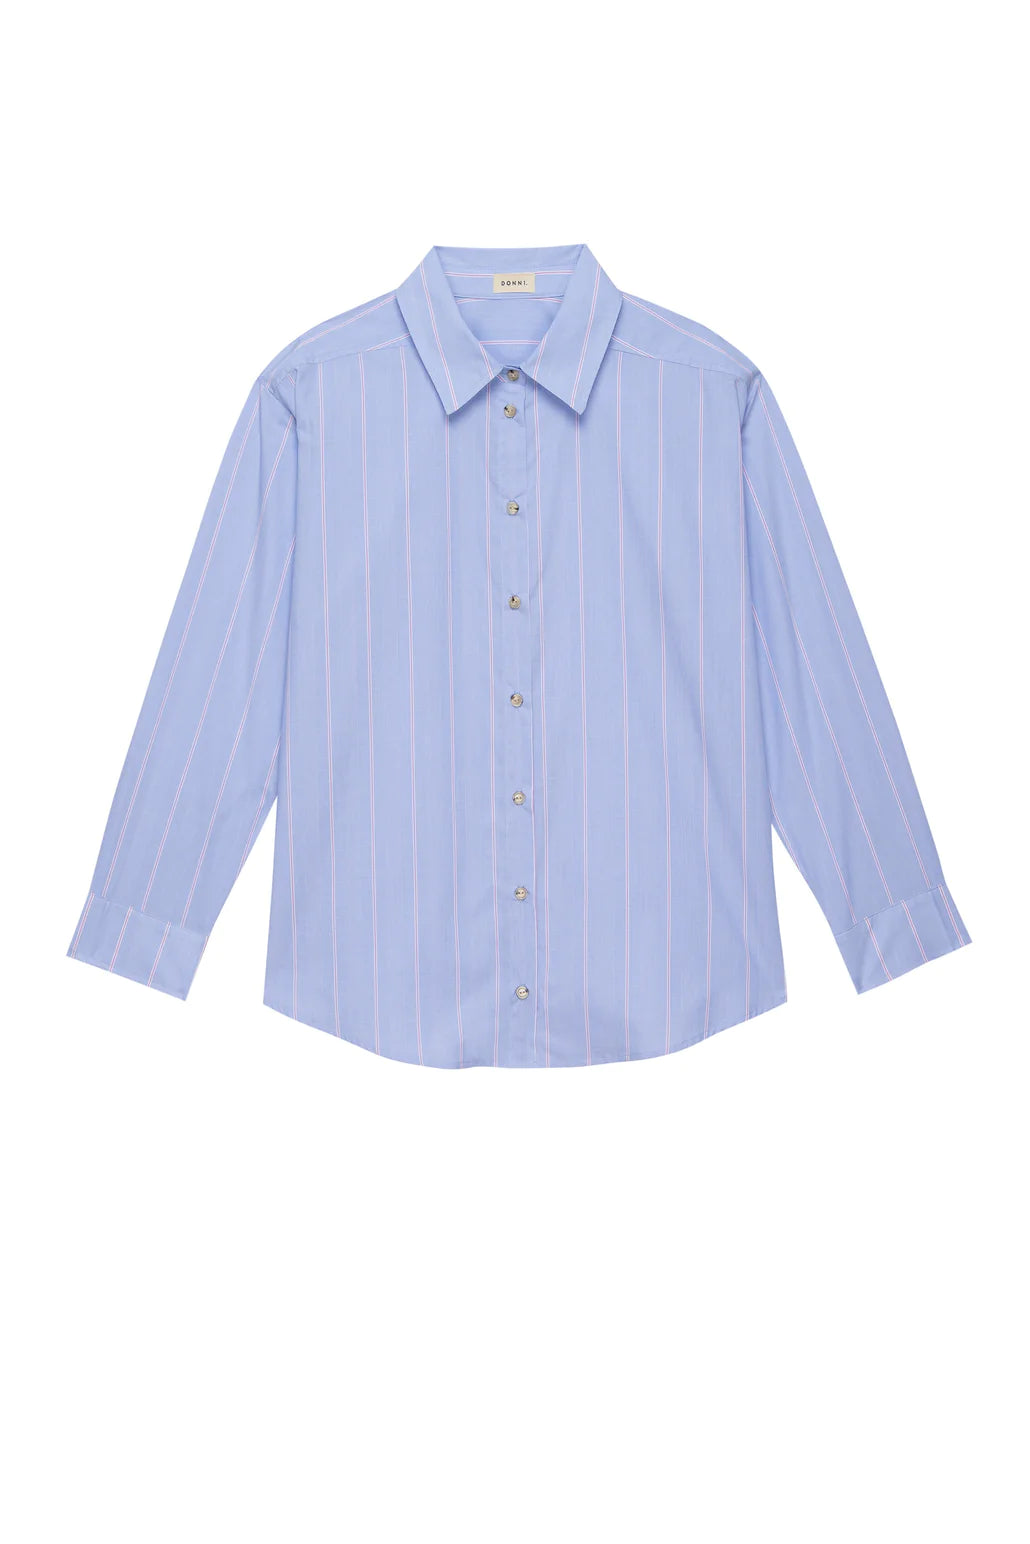 DONNI. The Pop Button Down Stripe Shirt 0036